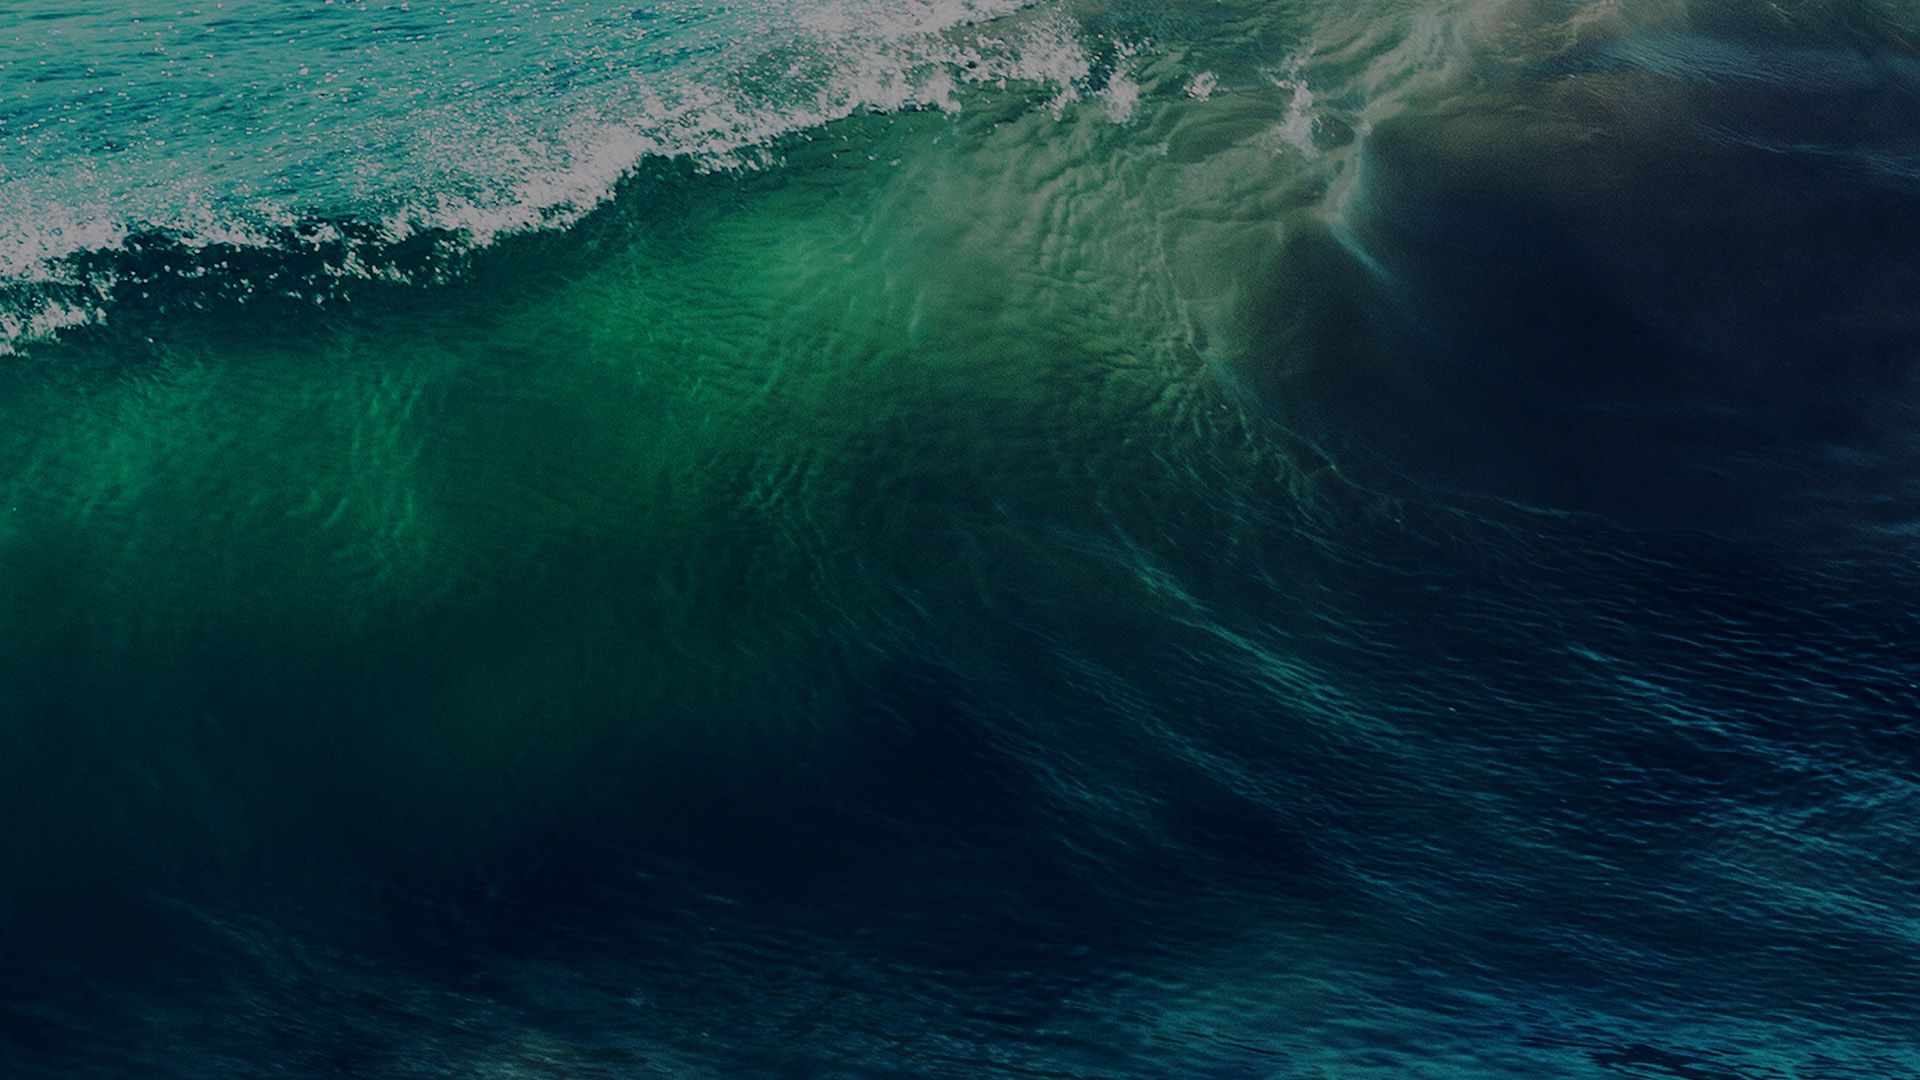 A wave in the ocean - Ocean, wave